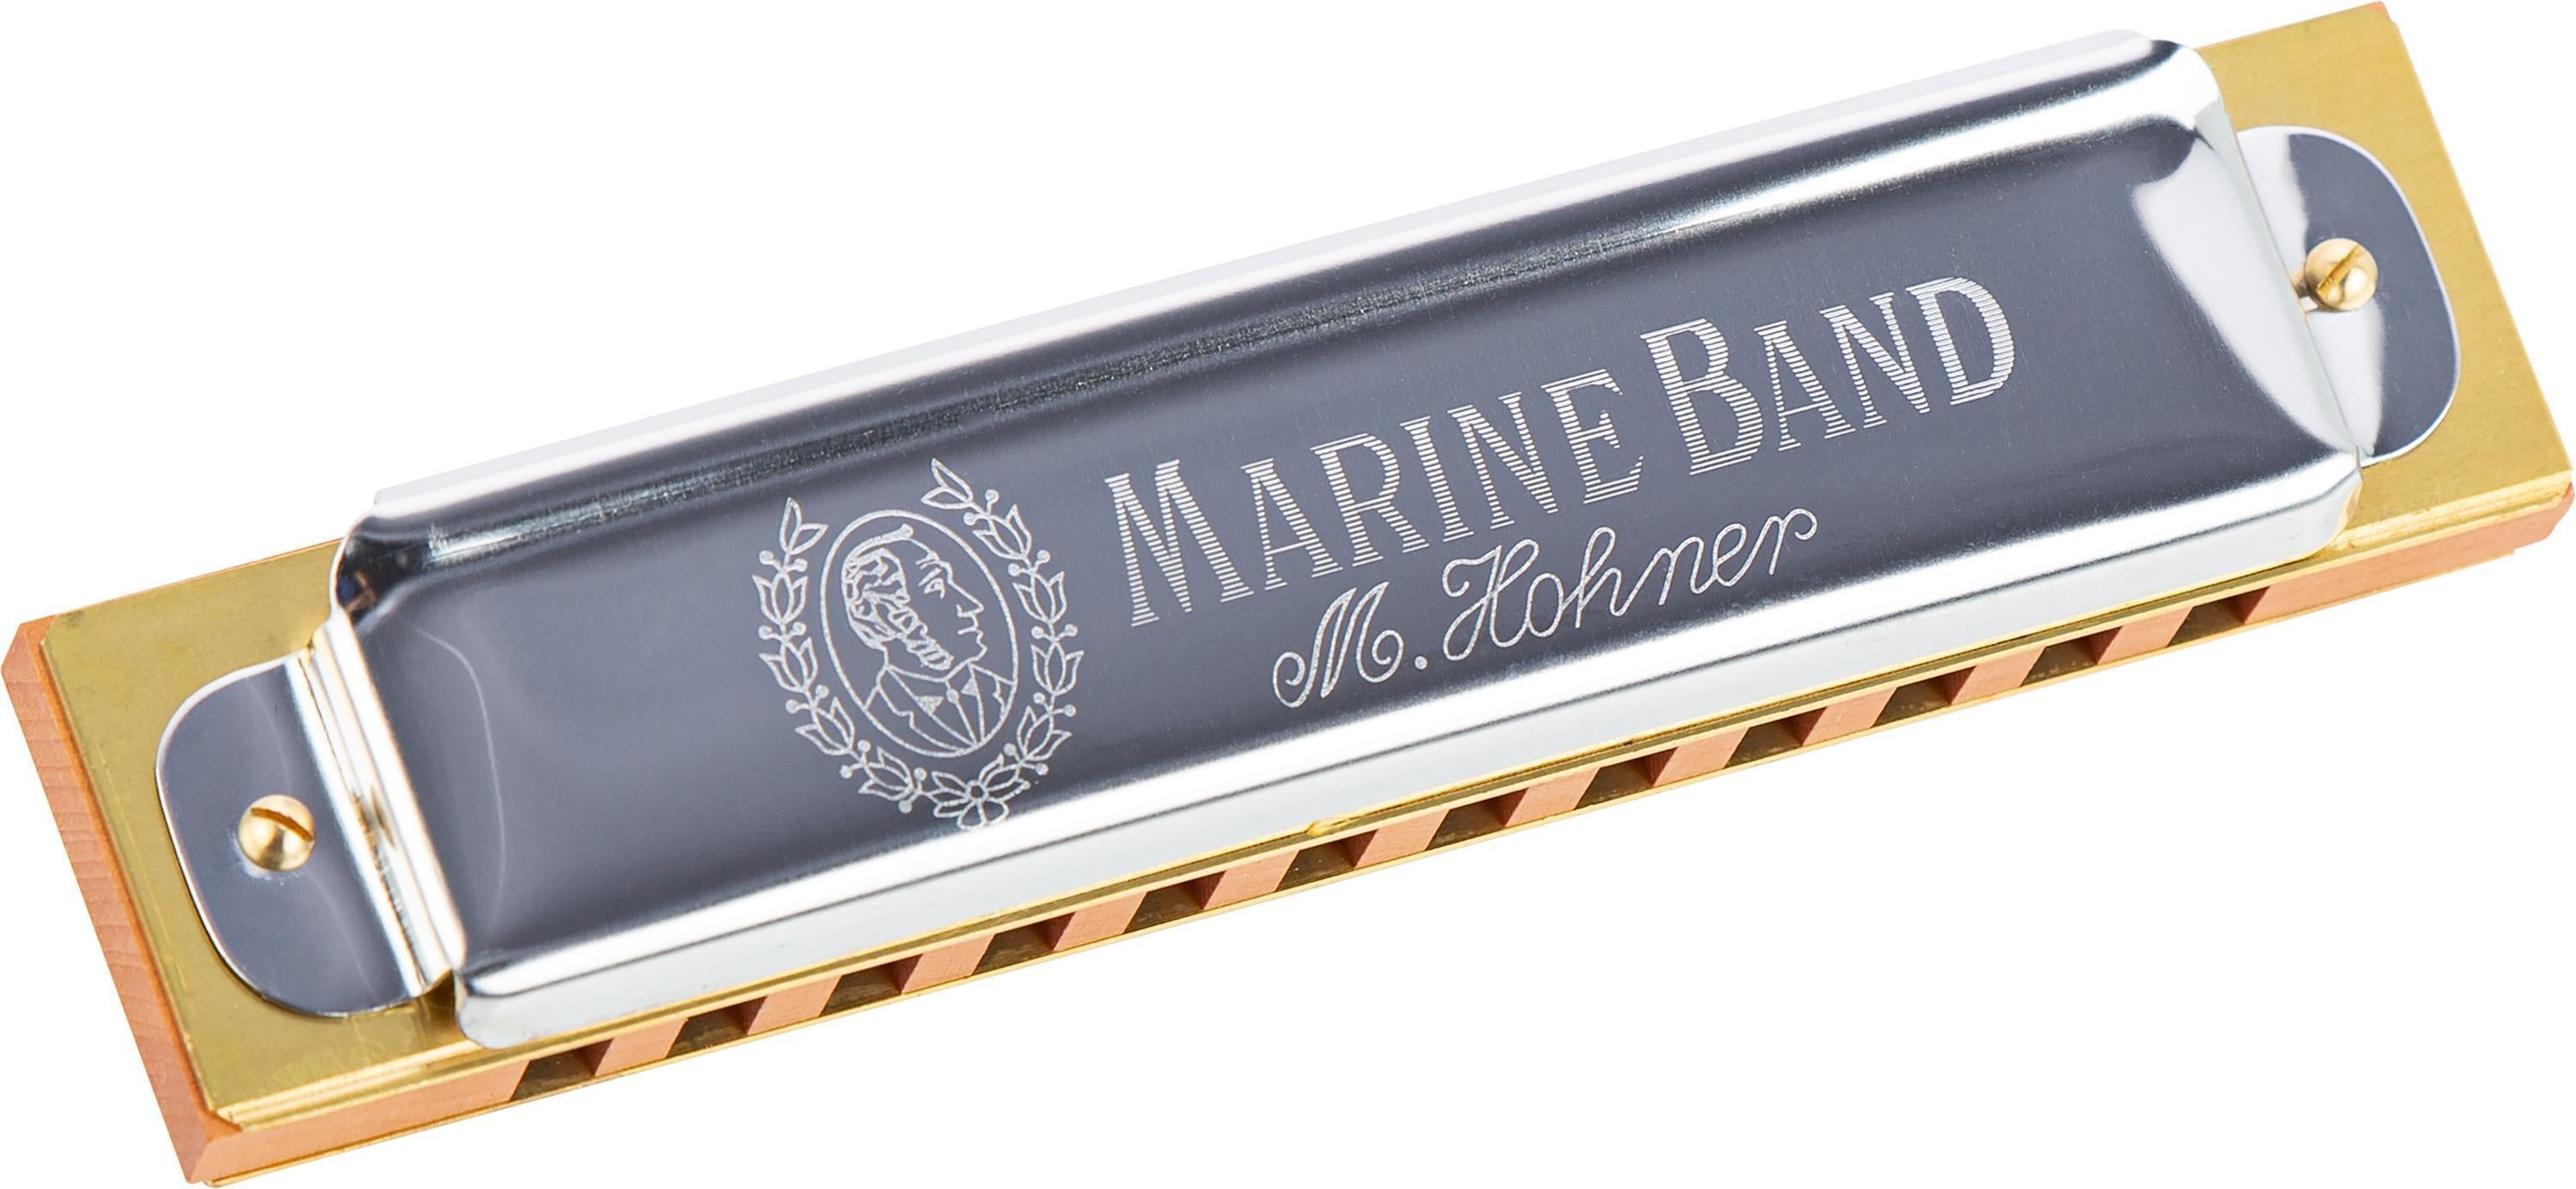 Hohner Marine Band 364 Harmonica - Key of G